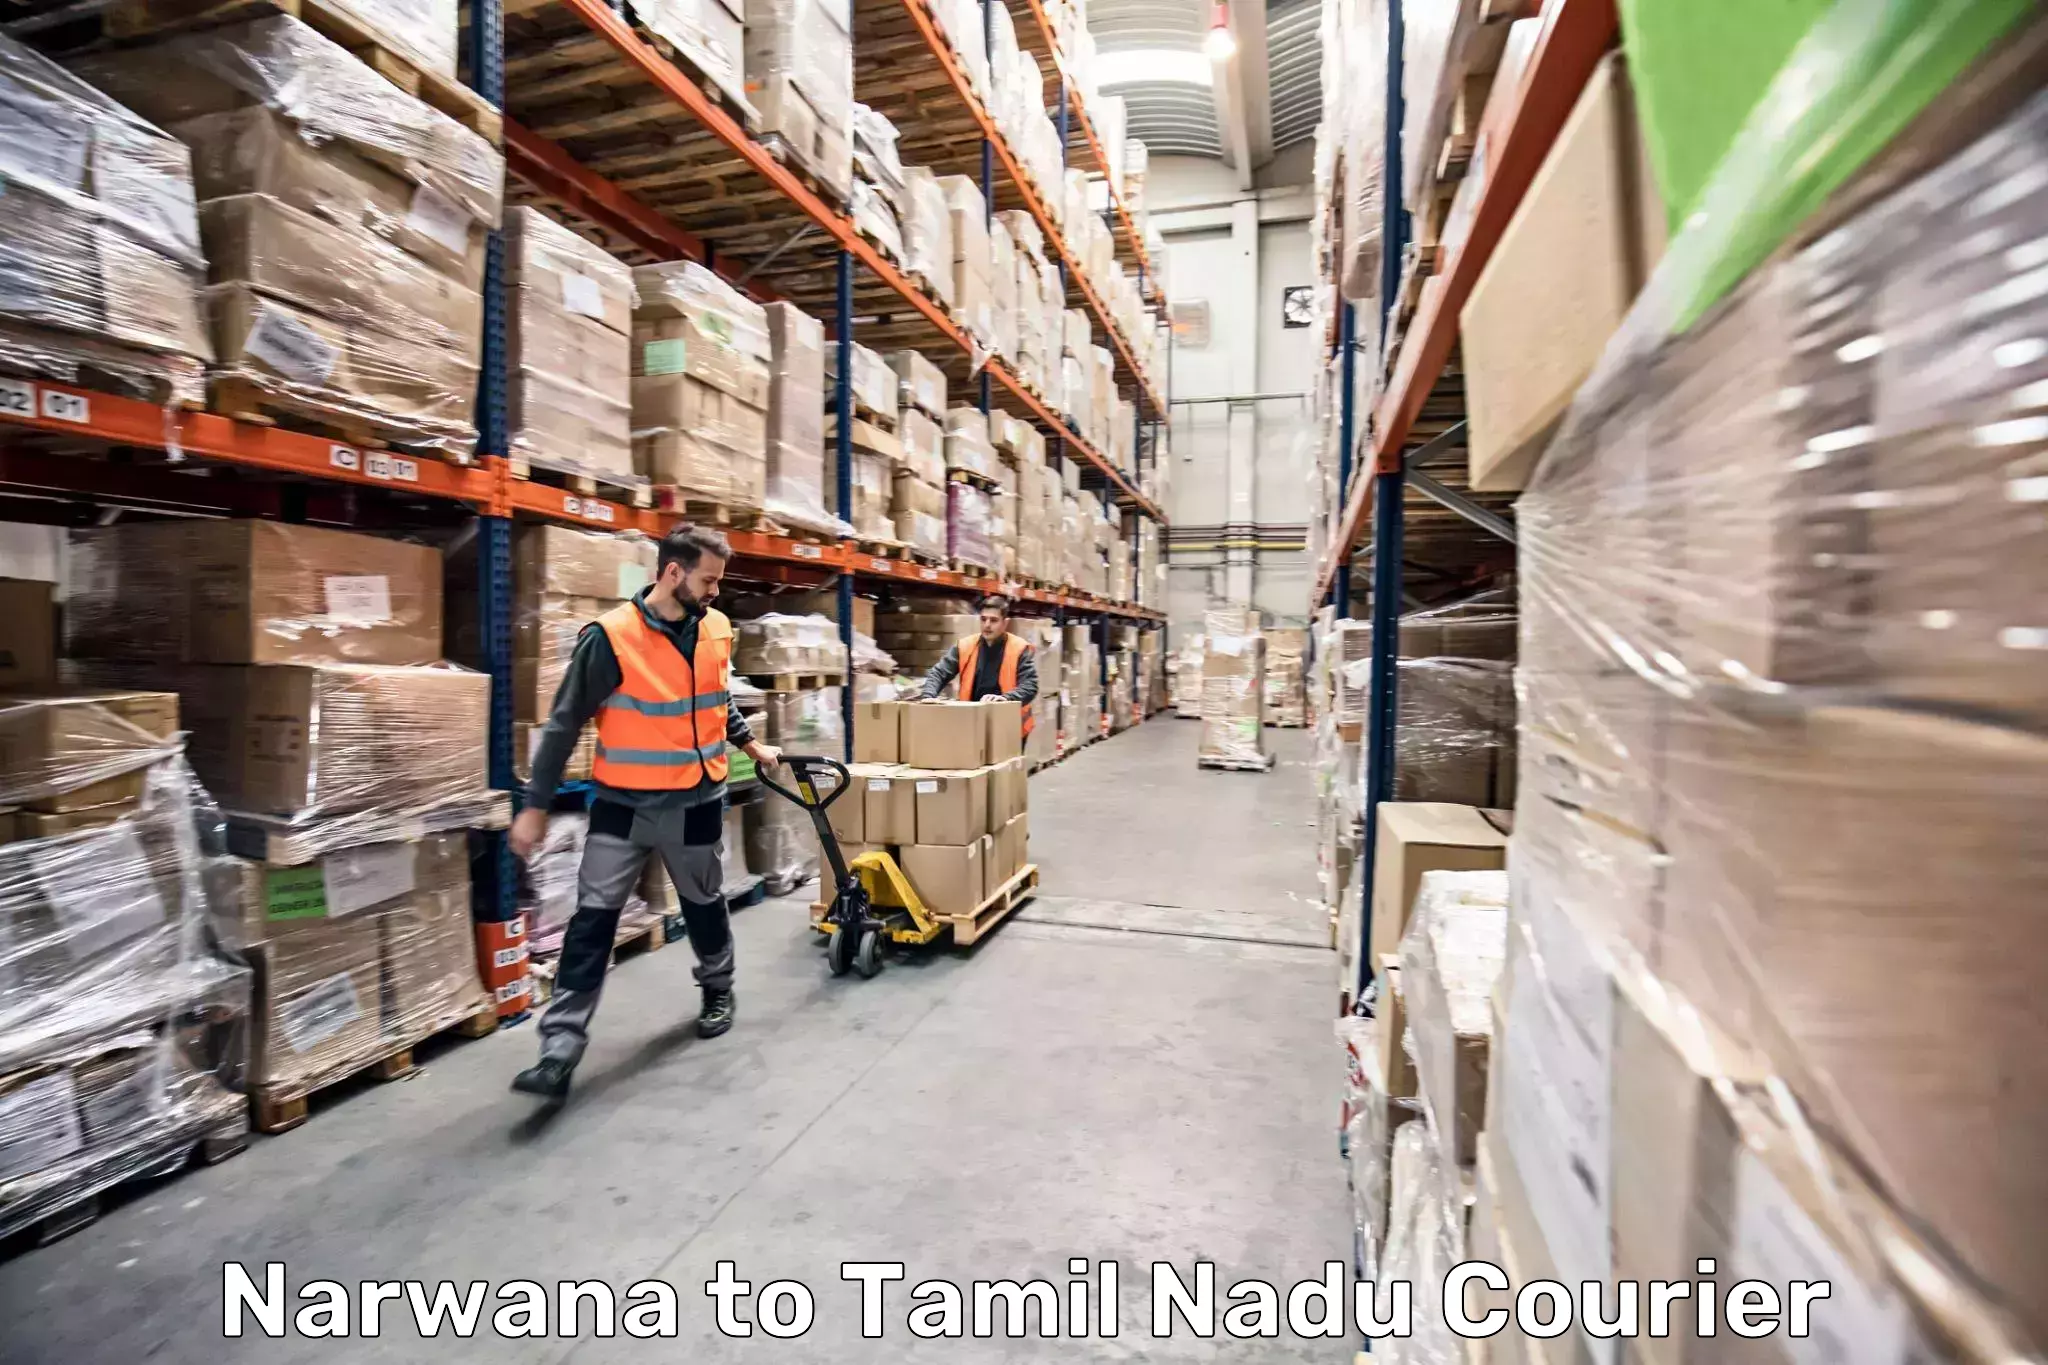 Luggage transport company Narwana to Thiruvadanai